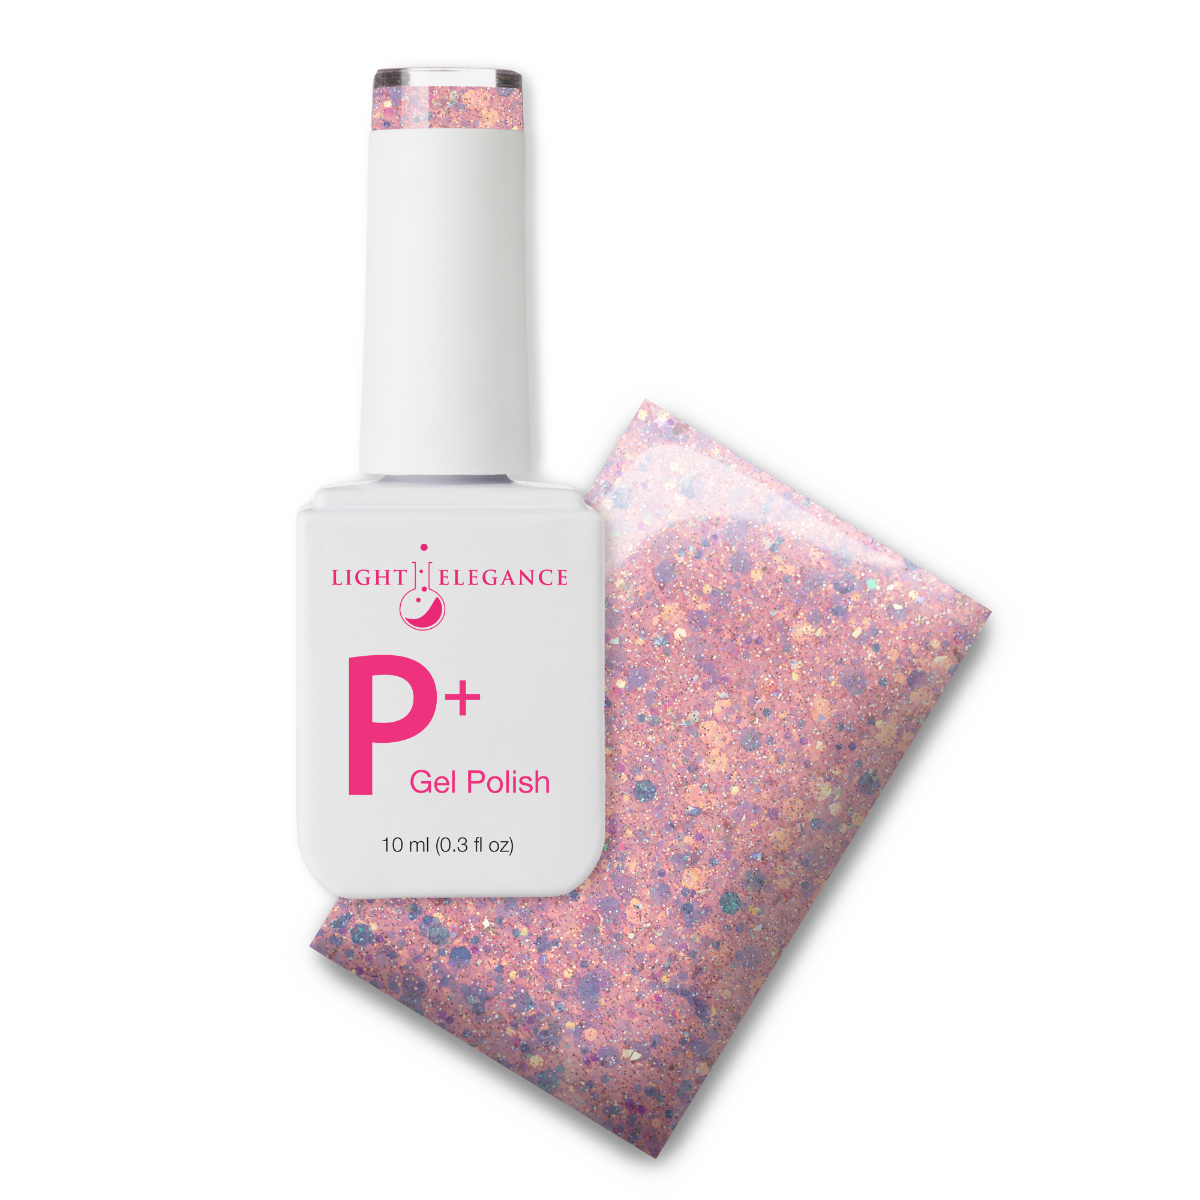 Light Elegance P+ Soak Off Glitter Gel - My Masterpiece :: New Packaging - Creata Beauty - Professional Beauty Products